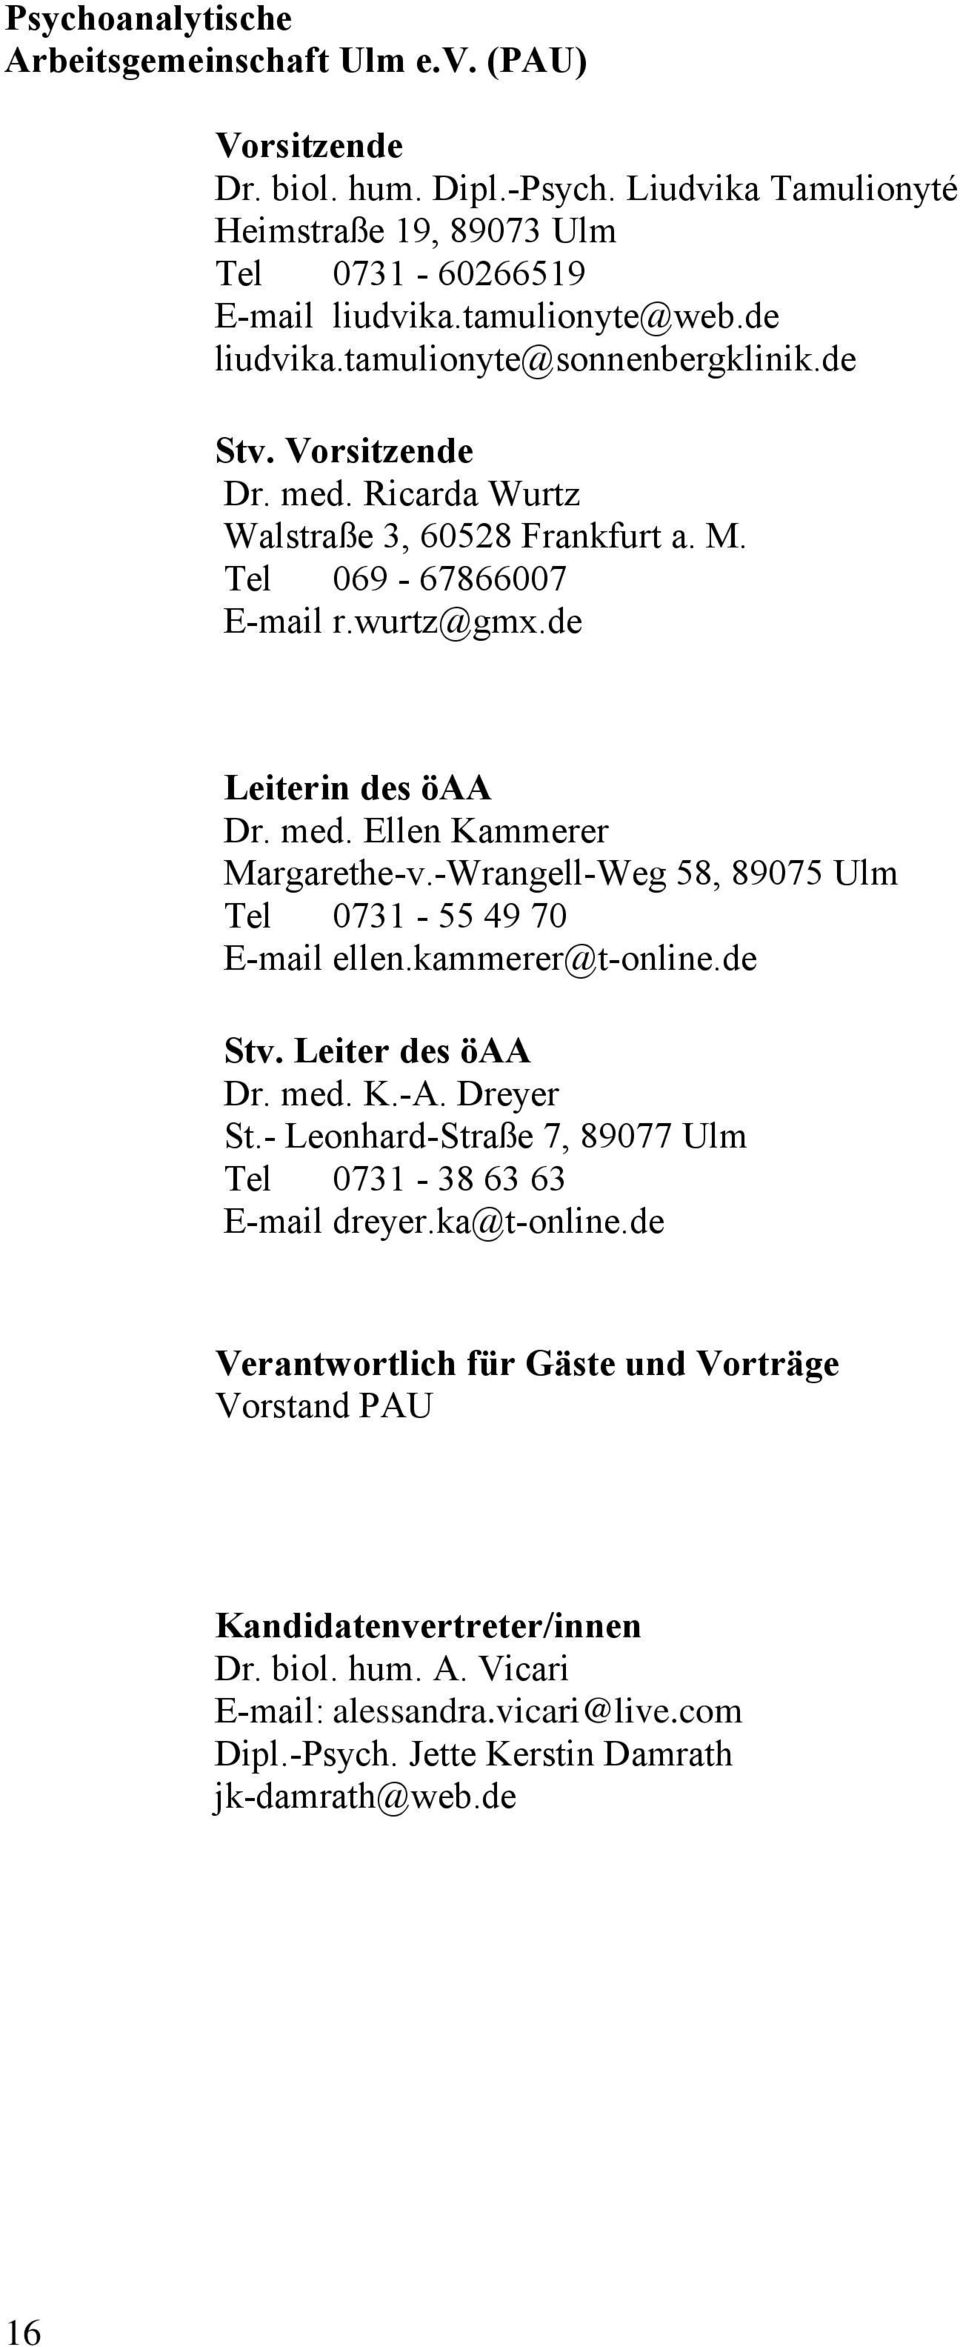 -Wrangell-Weg 58, 89075 Ulm Tel 0731-55 49 70 E-mail ellen.kammerer@t-online.de Stv. Leiter des öaa Dr. med. K.-A. Dreyer St.- Leonhard-Straße 7, 89077 Ulm Tel 0731-38 63 63 E-mail dreyer.